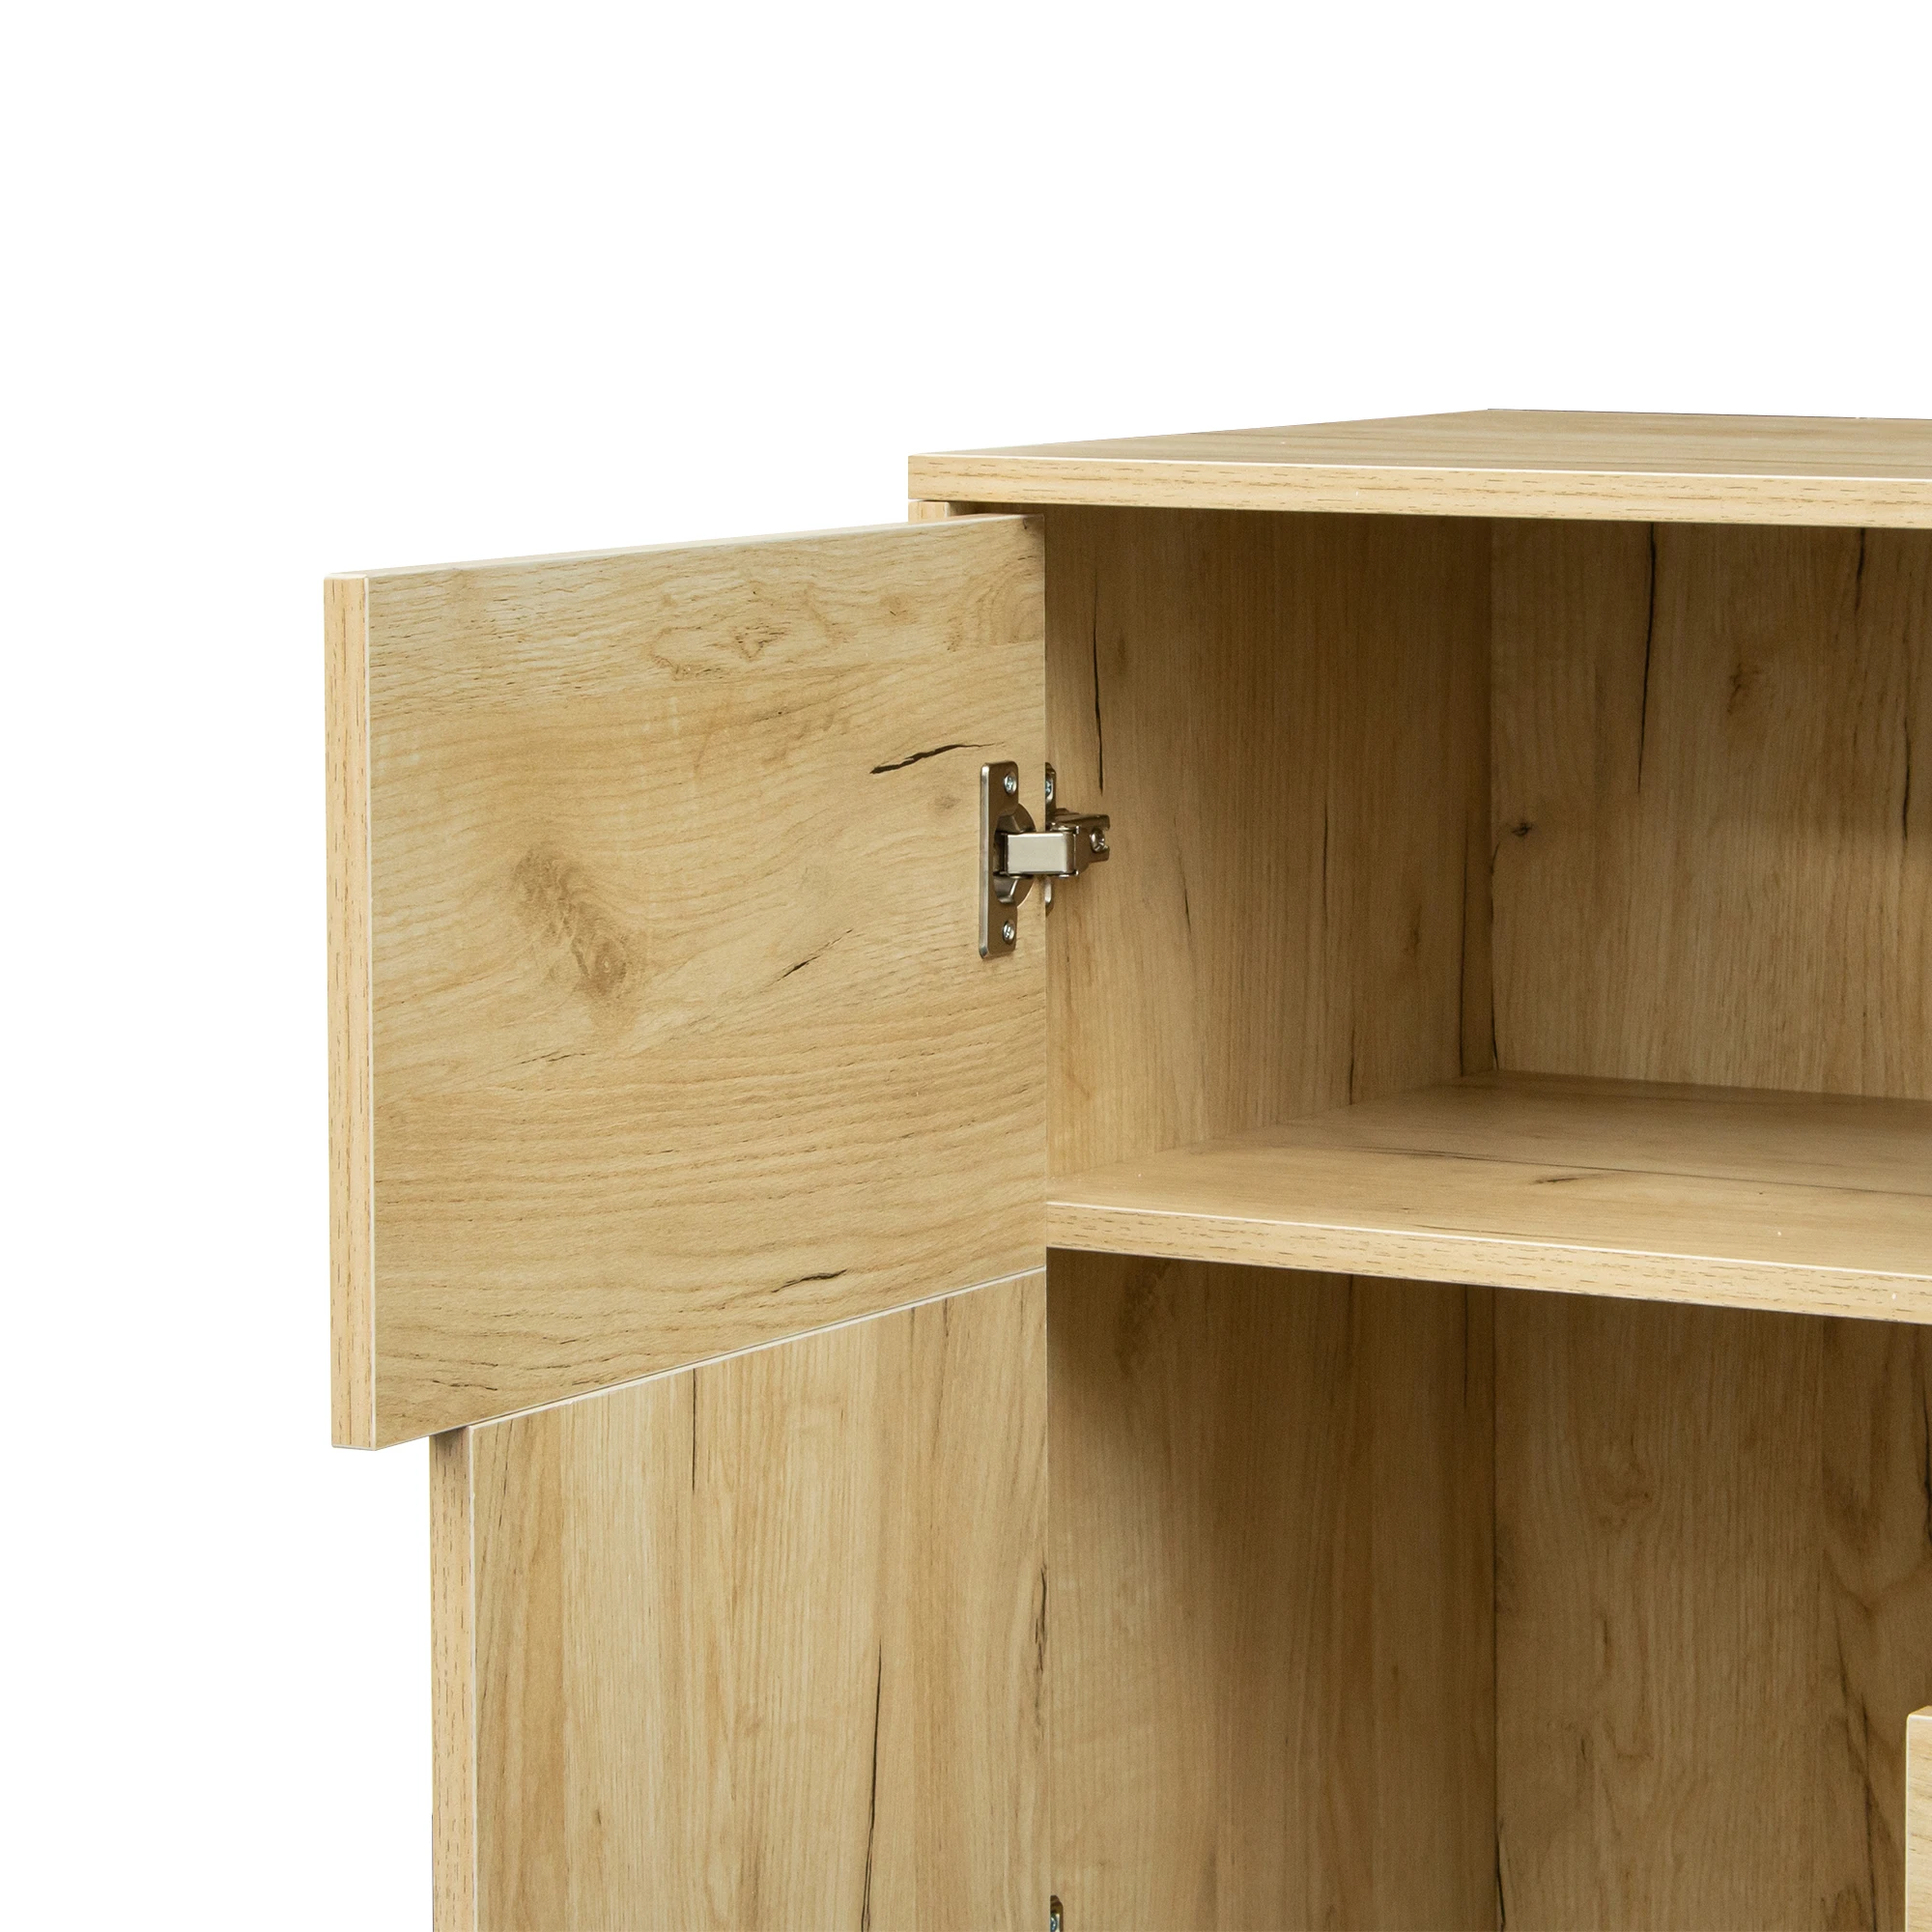 Solid Wood Cabinet Sideboard Buffet